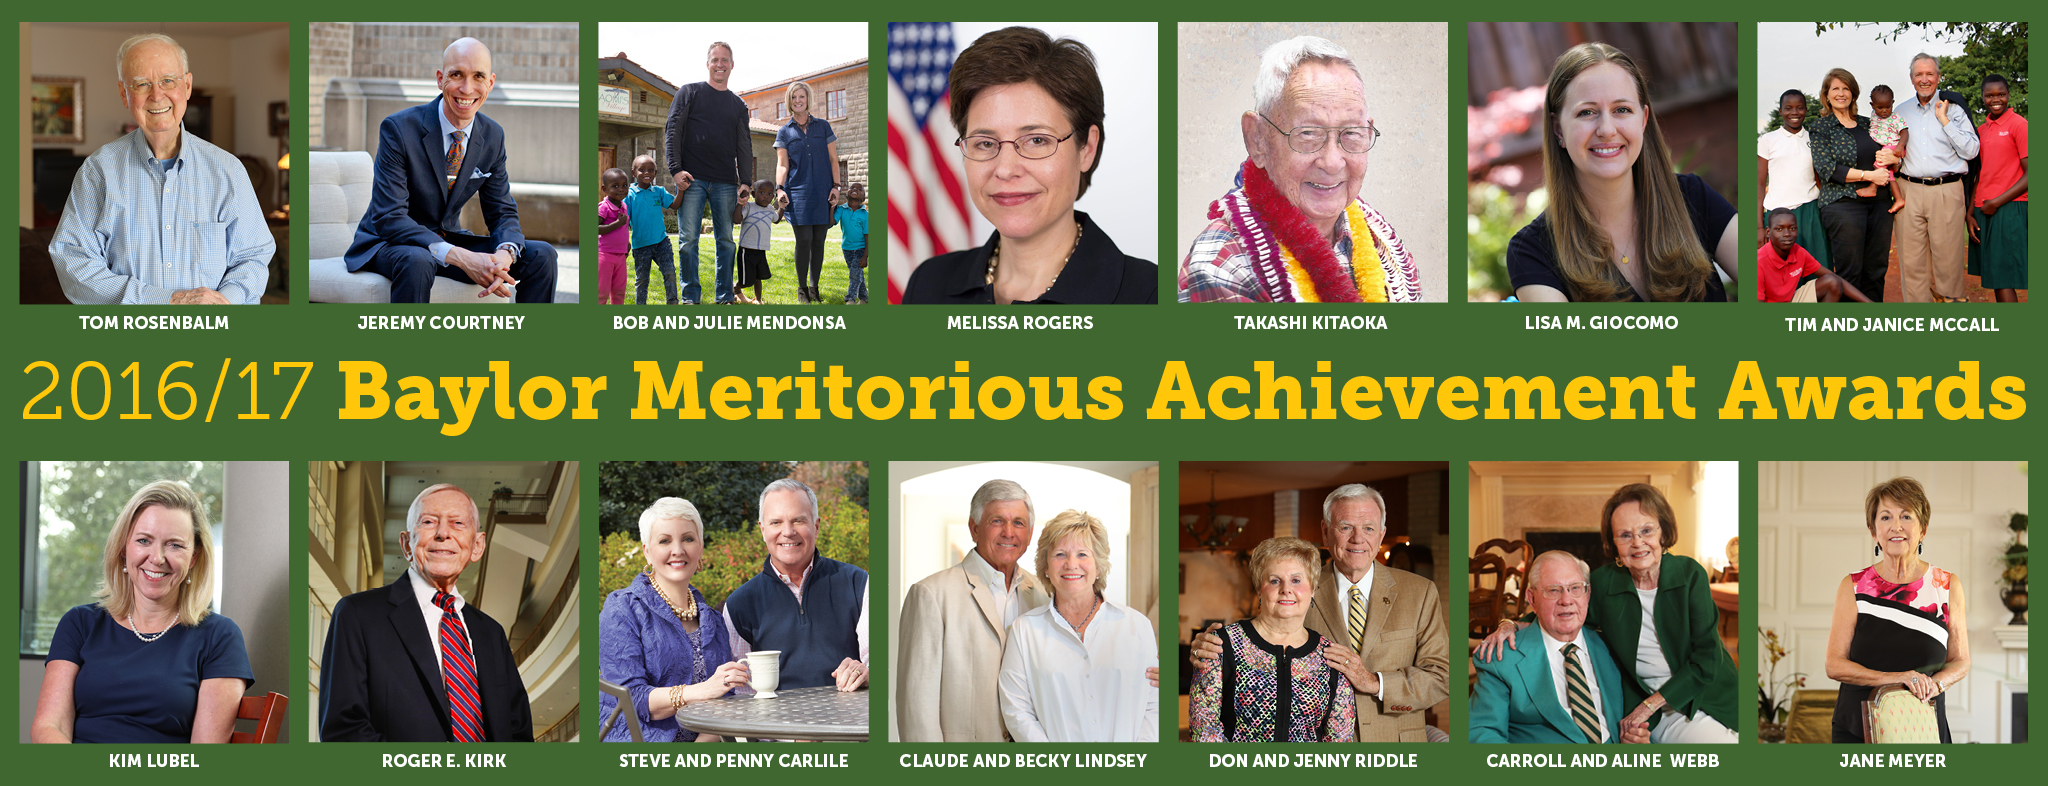 2016-17 Baylor Meritorious Achievement Award winners